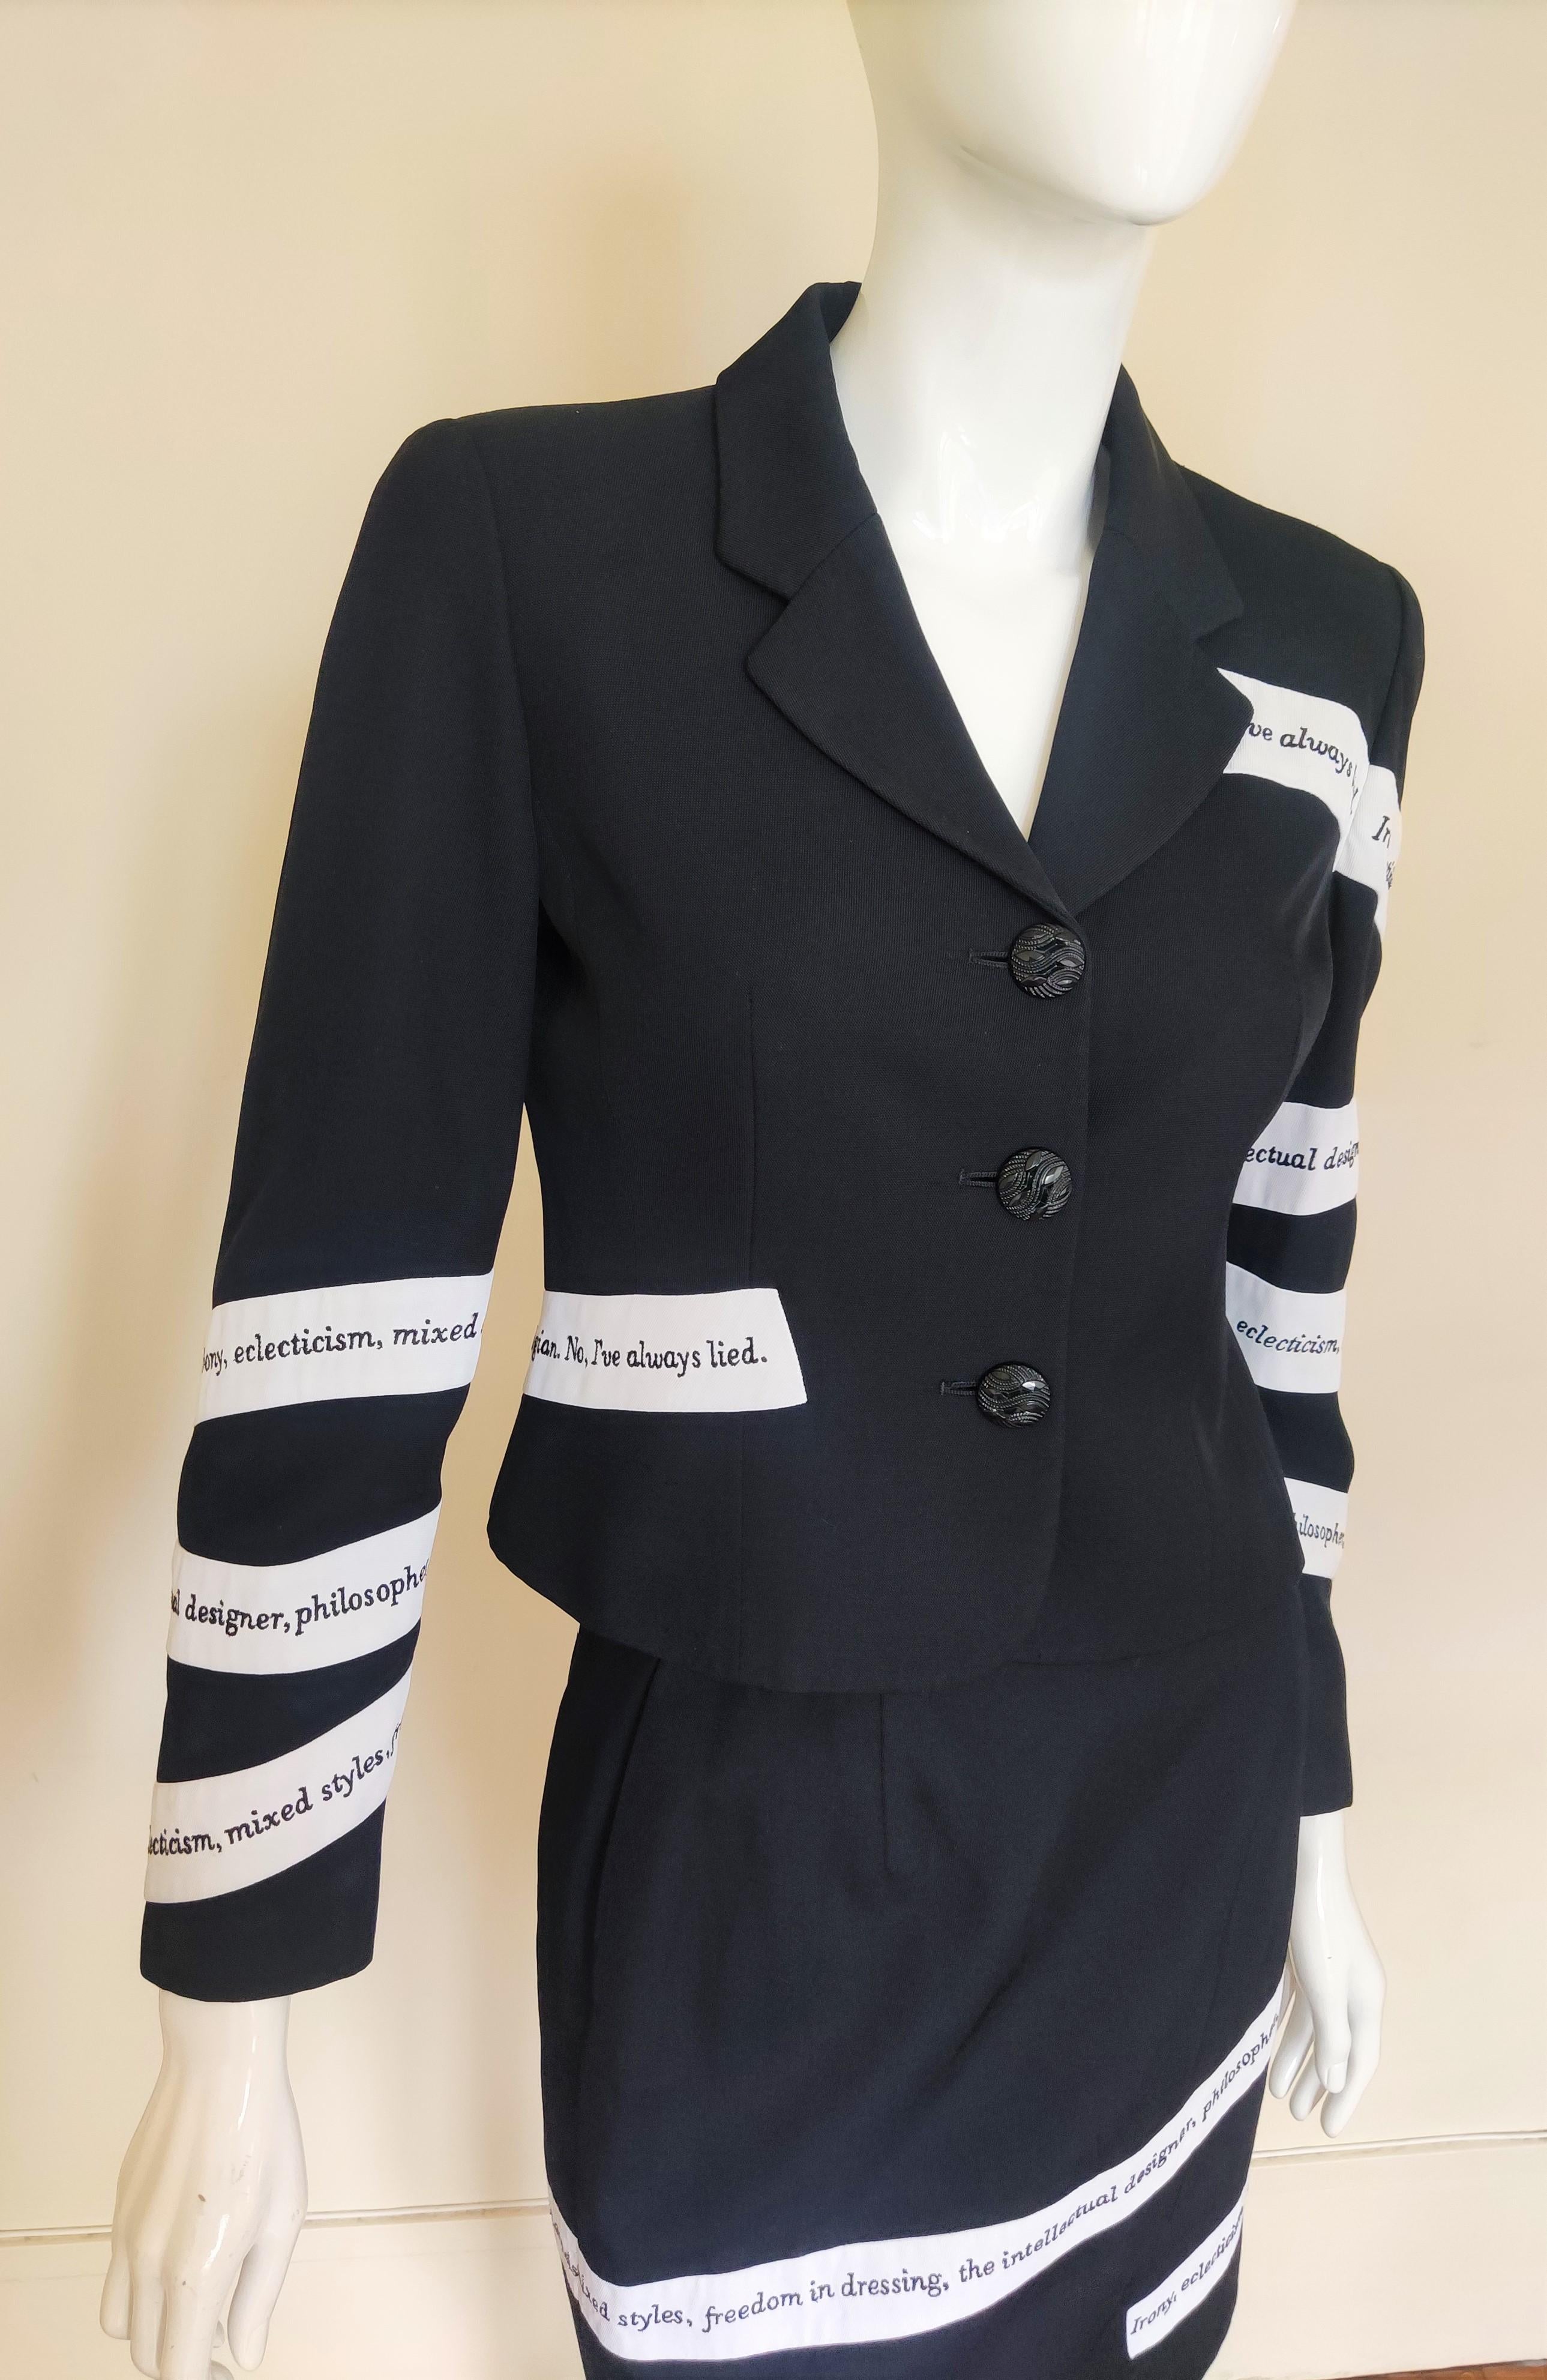 Moschino Cheap and Chic Irony Text Tape Vintage Couture Schwarz-Weißes Kleid Anzug im Angebot 10